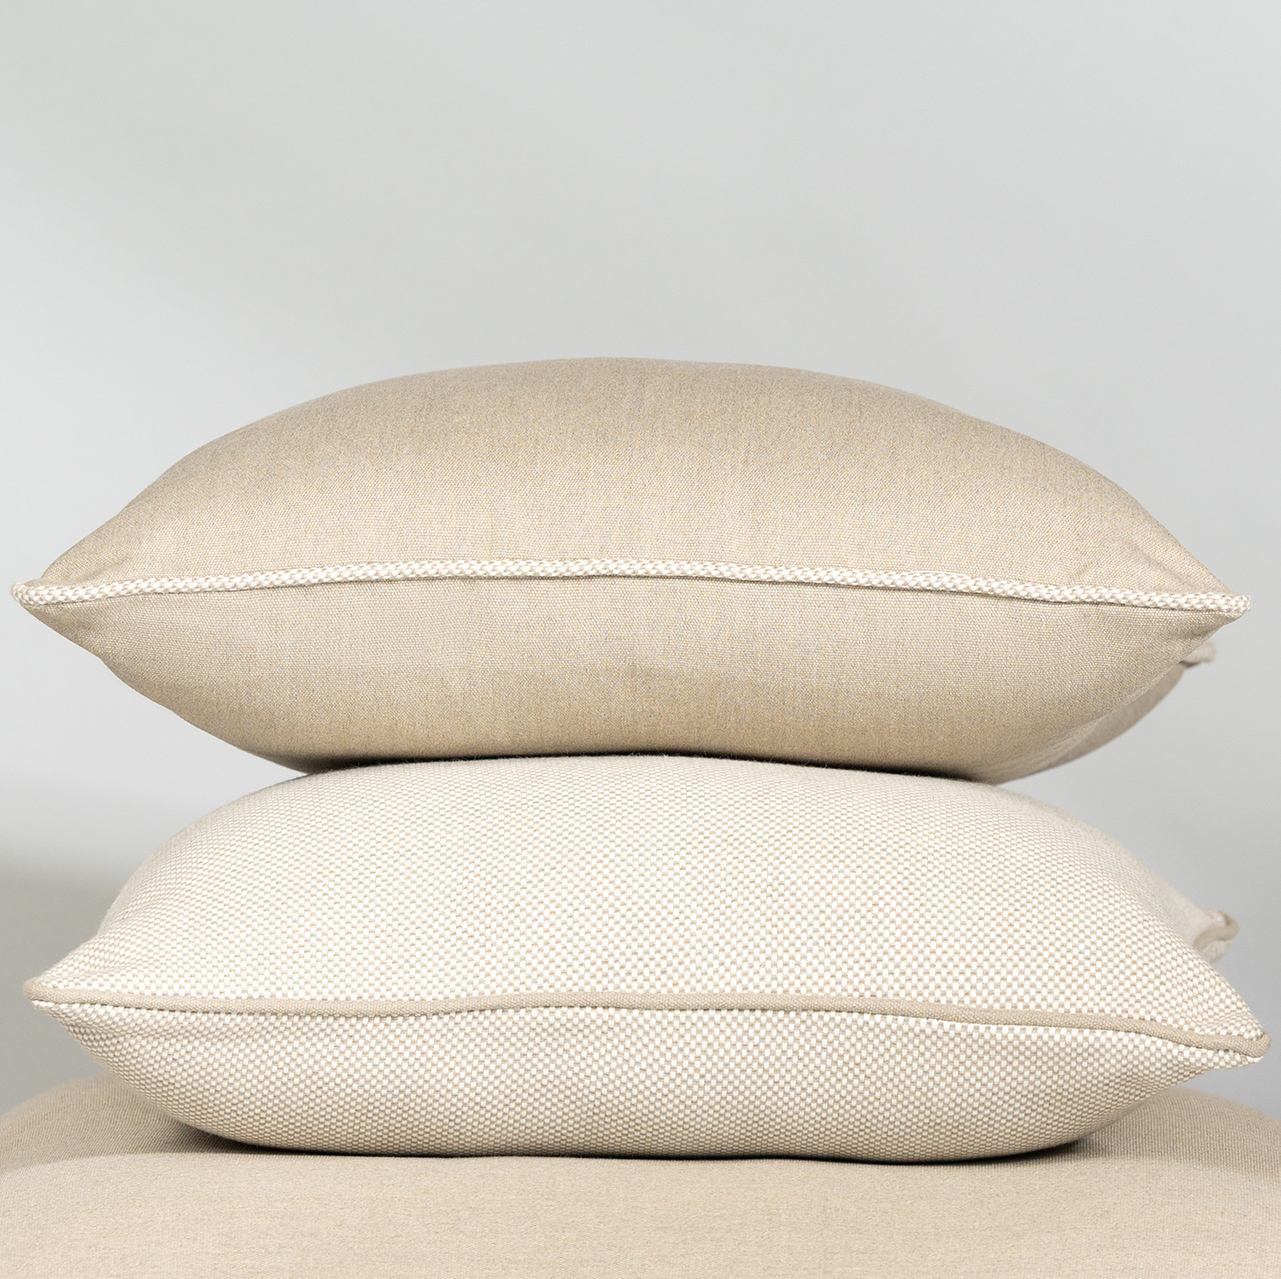 Aperto Outdoor Cushion - Indigo Stripe